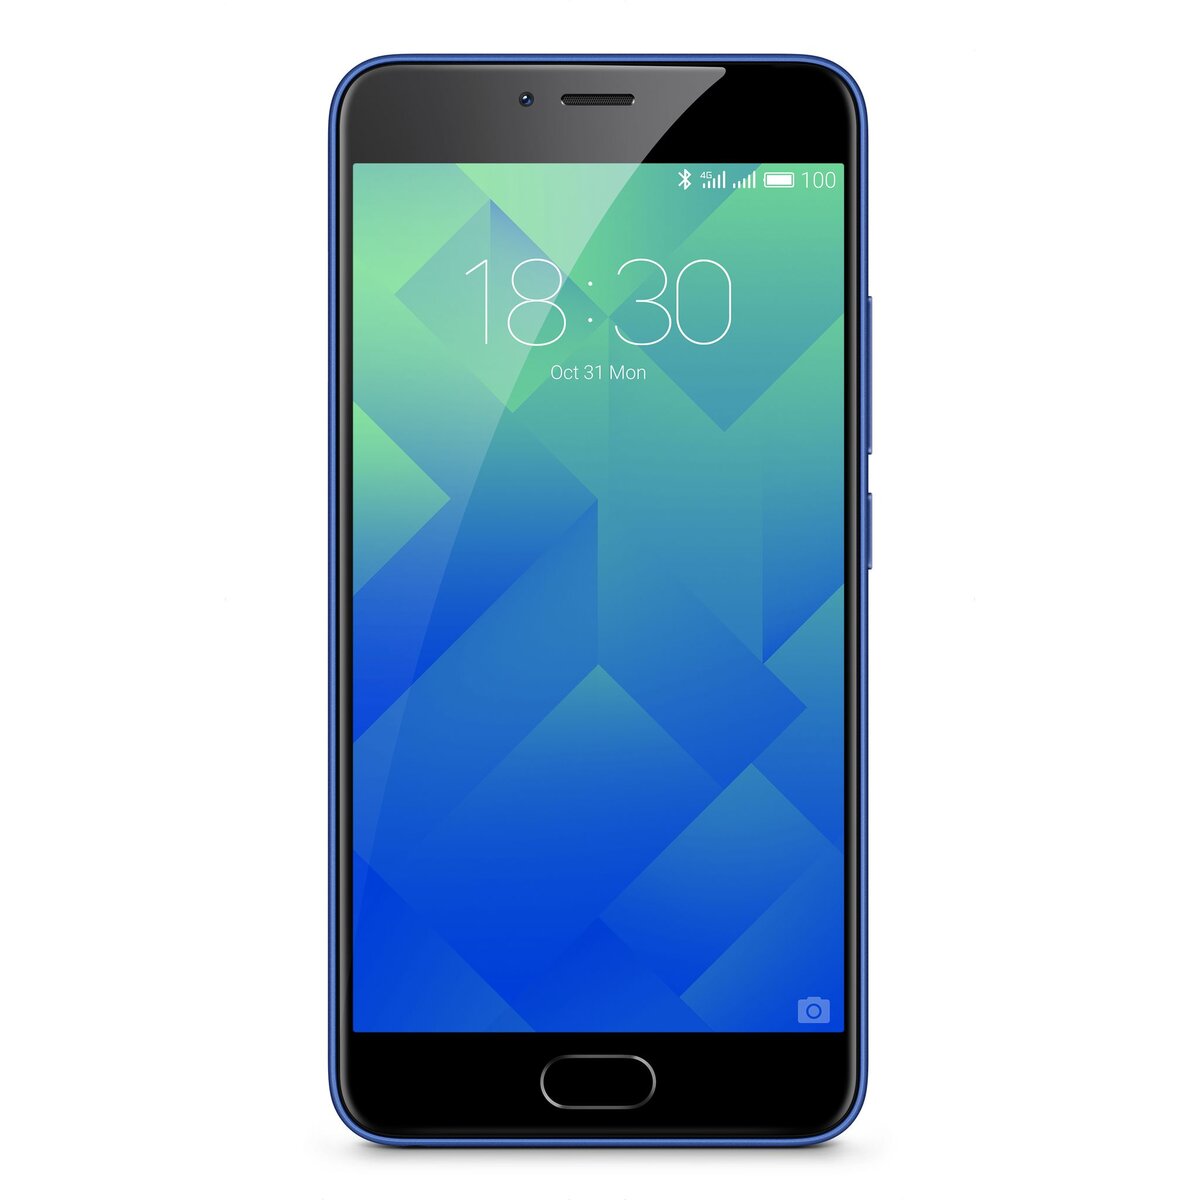 MEIZU Smartphone - M5 - Bleu - Double Sim